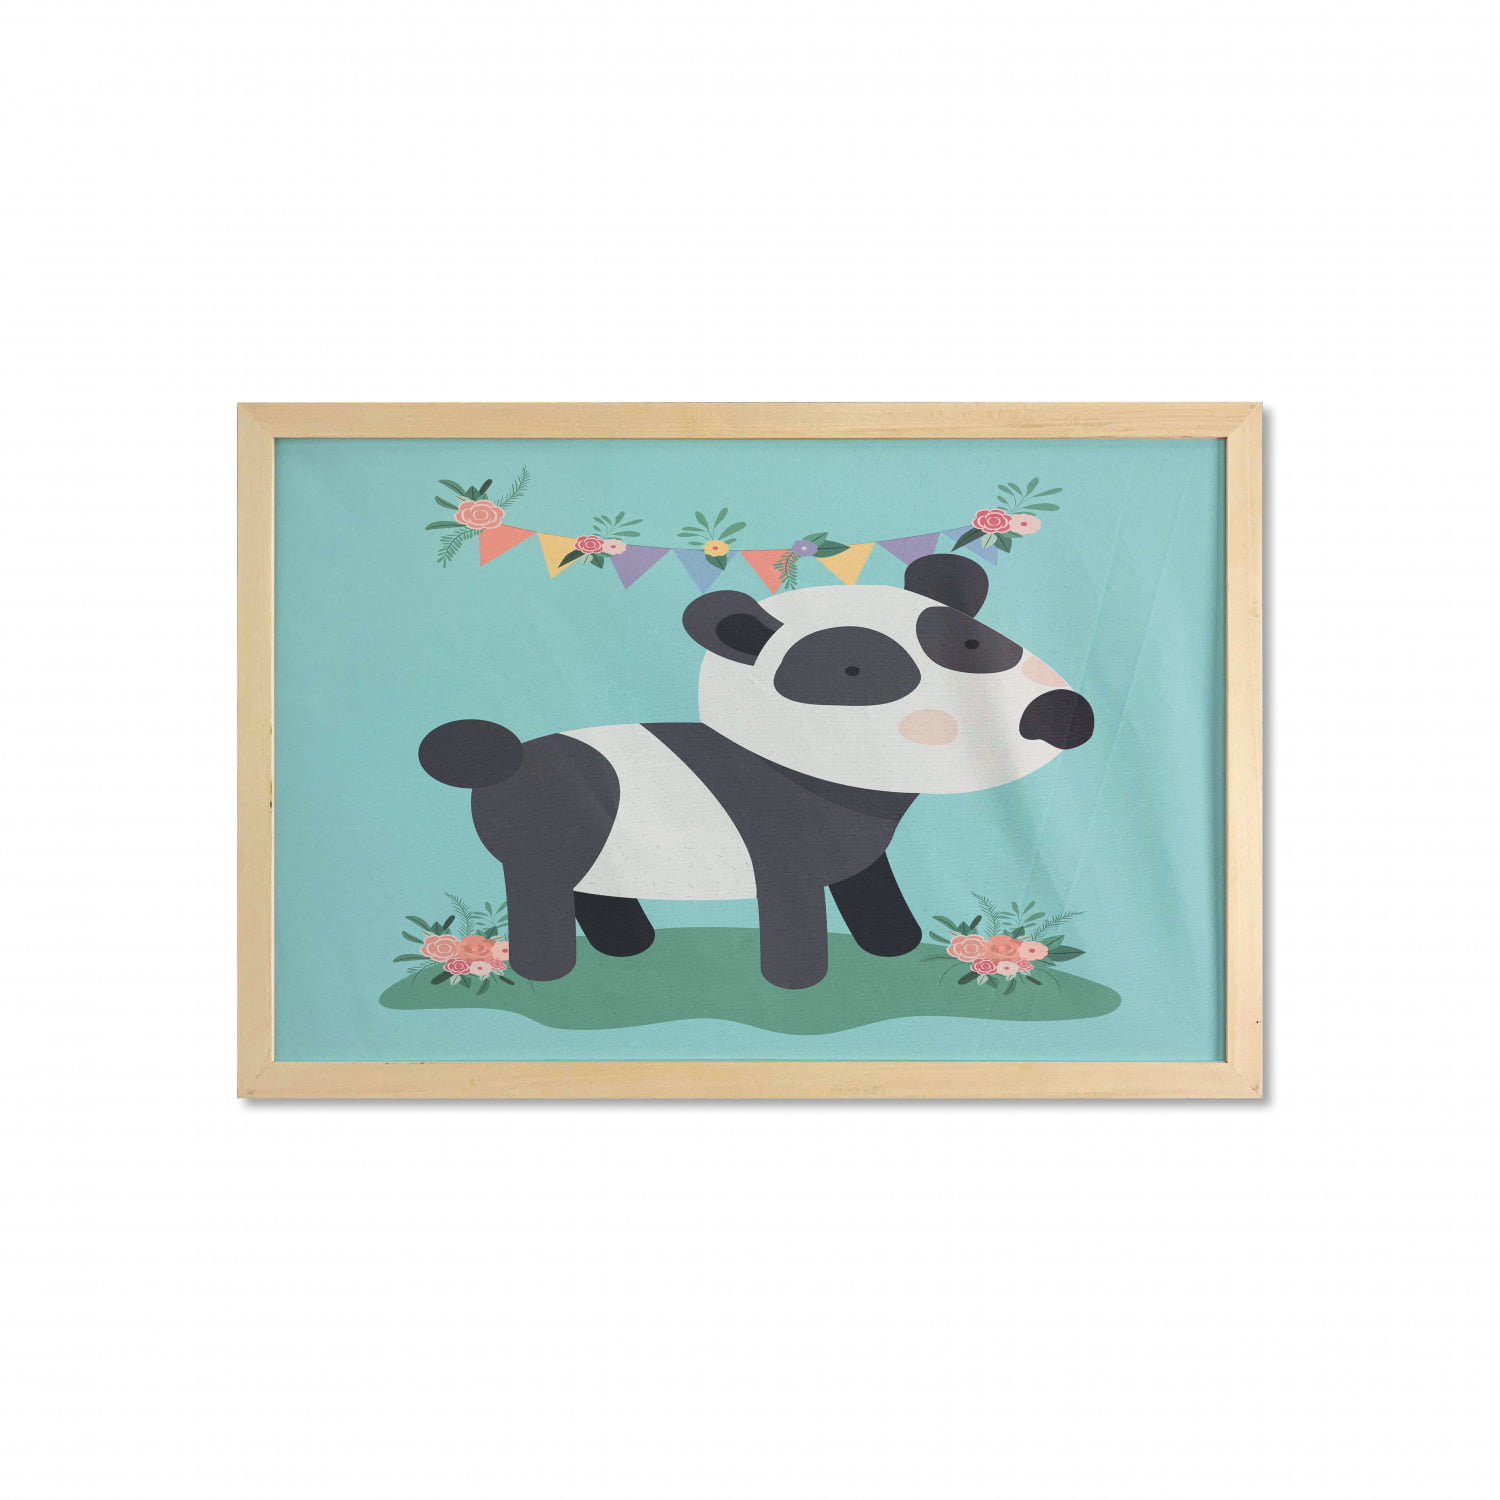 Panda beautiful Abstract Watercolour Poster Posters Print Prints Art Gift Gifts